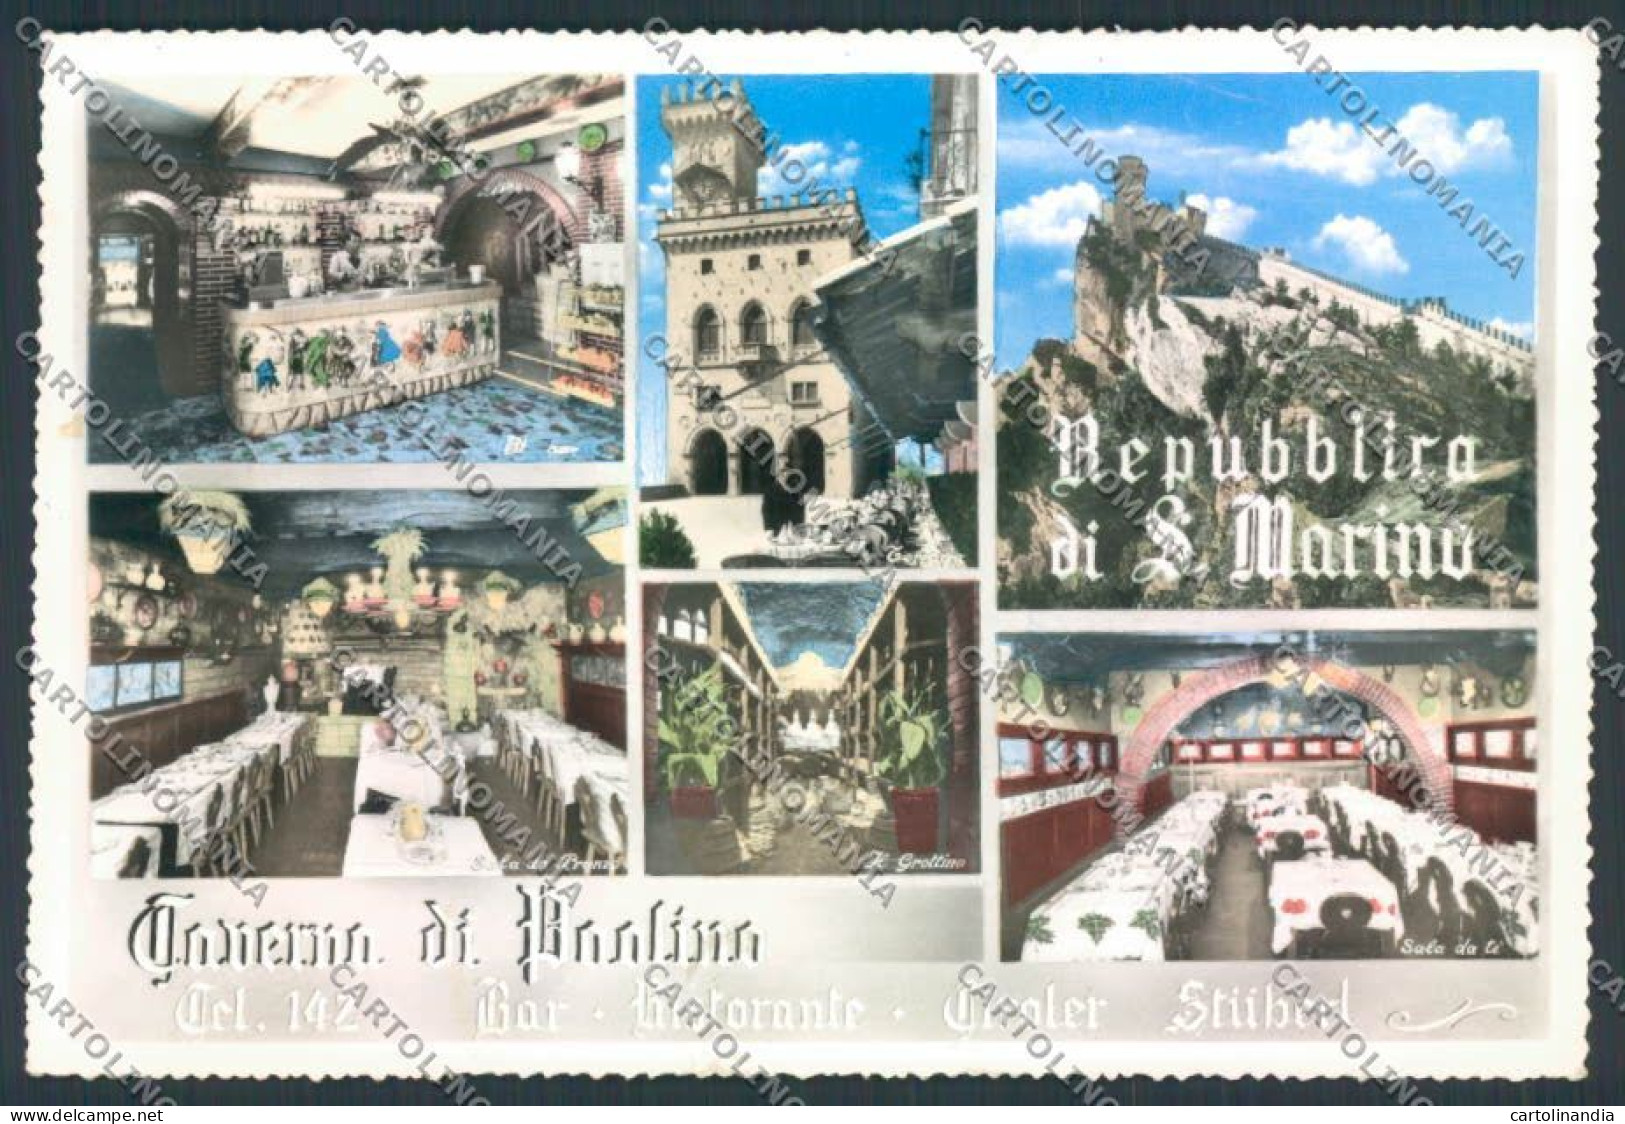 San Marino Foto FG Cartolina ZF5900 - Saint-Marin